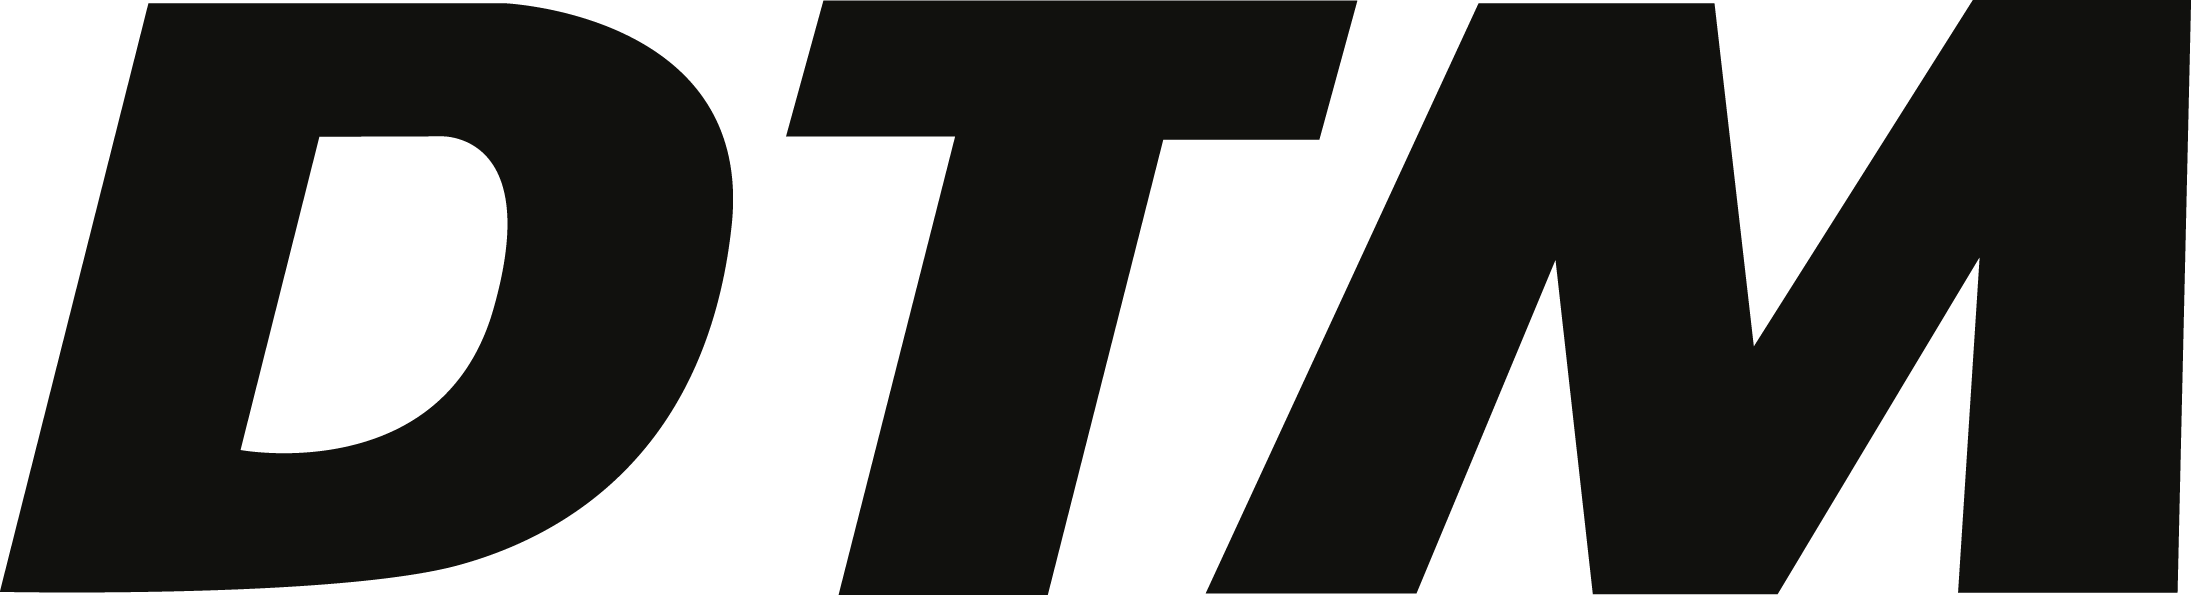 Download Dtm Deutsche Tourenwagen Masters Logo Dtm Logo Png Png Image With No Background Pngkey Com